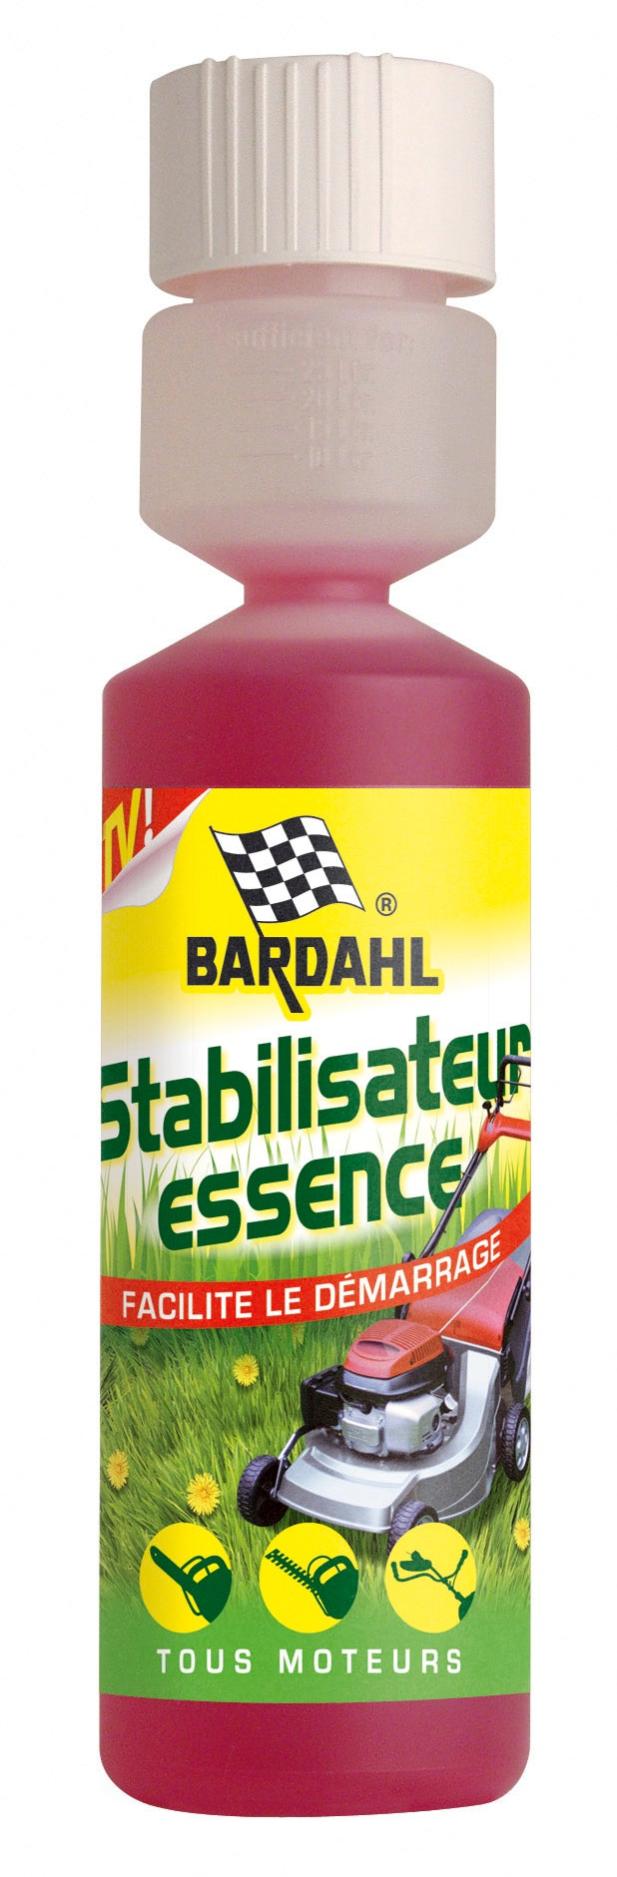 Additif stabilisateur essence BARDAHL, 0.25 l